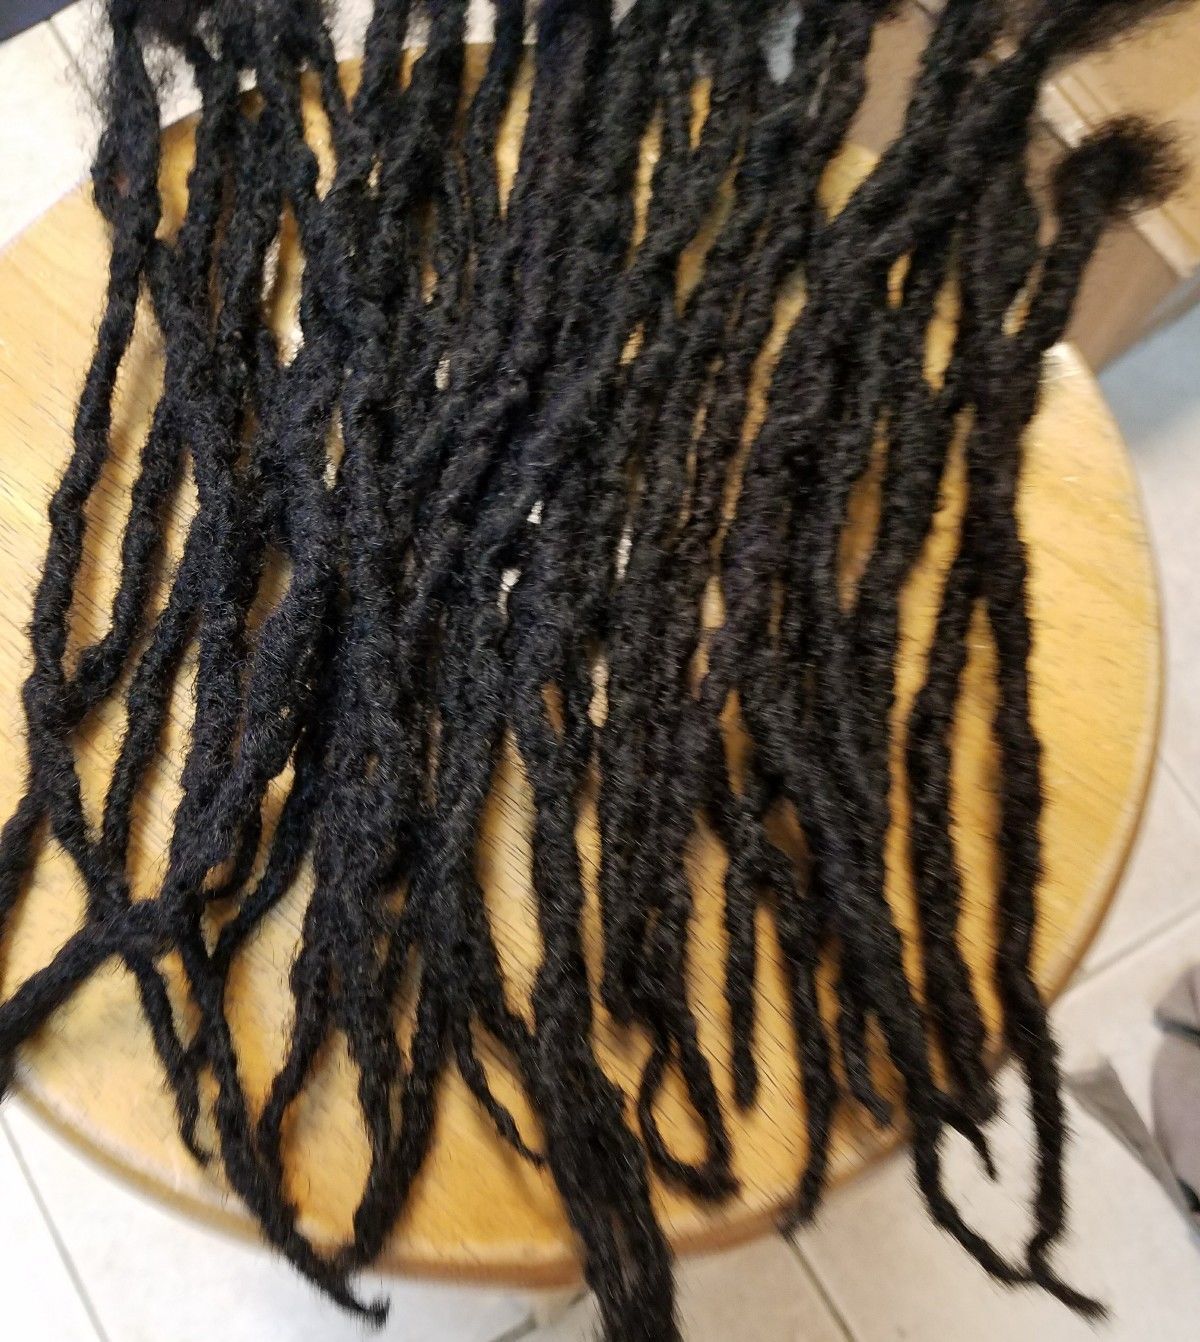 100% Virgin Nonprocess  Human Hair Locks Handmade 50 Pieces Up To 10" Black